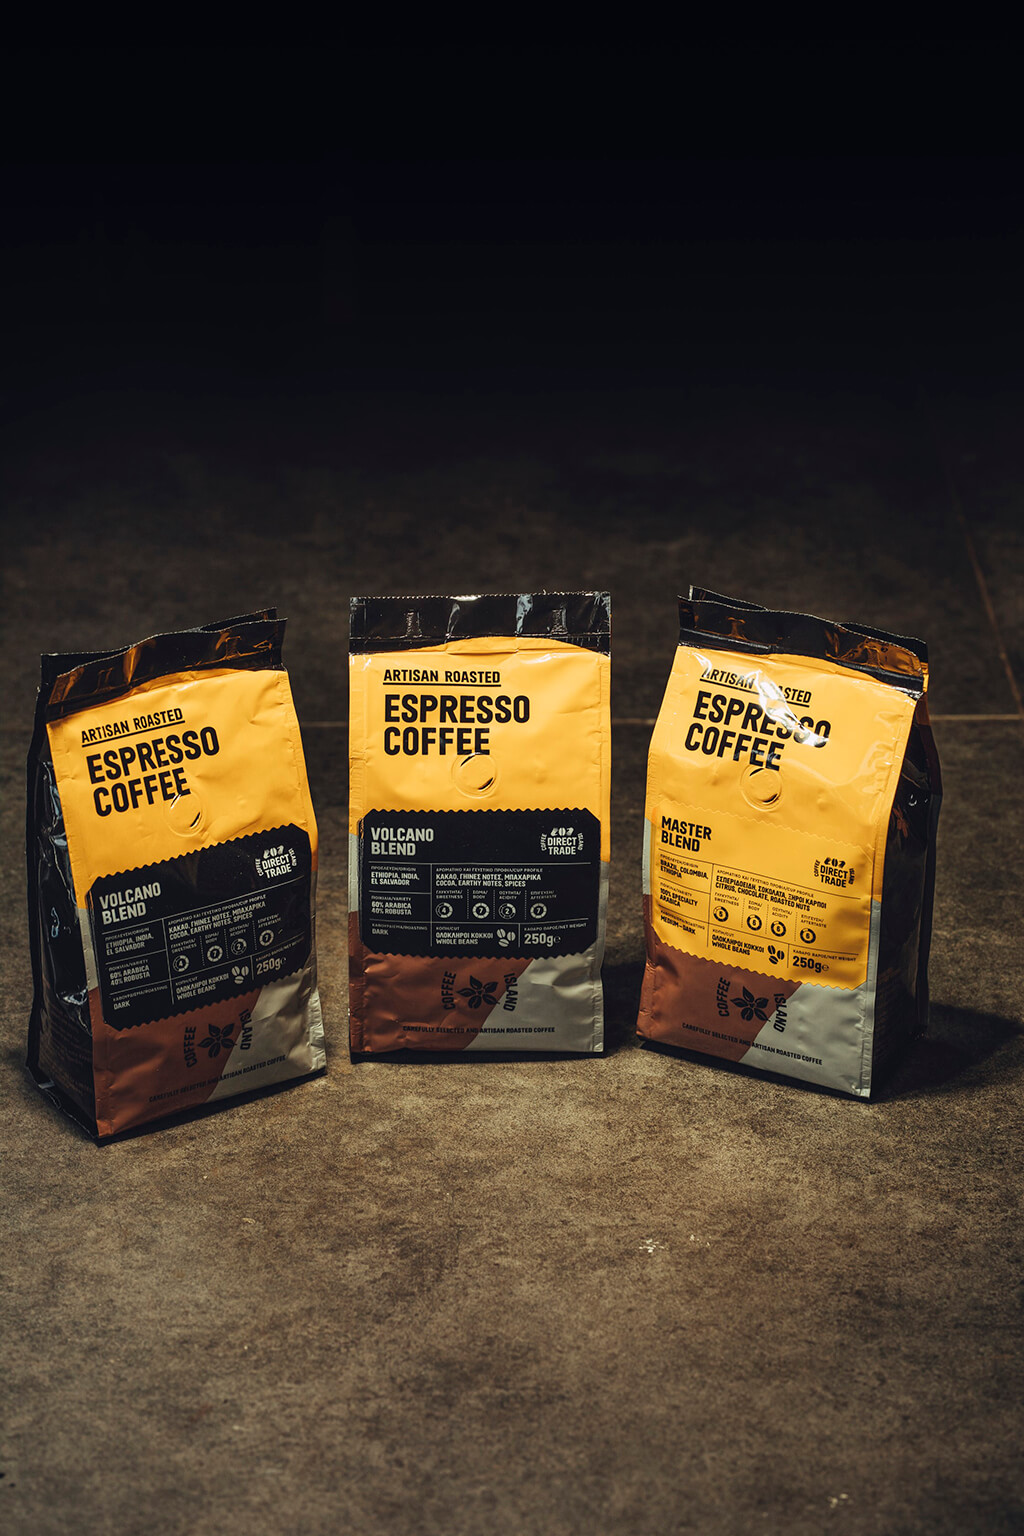 Coffee Island's espresso coffee package